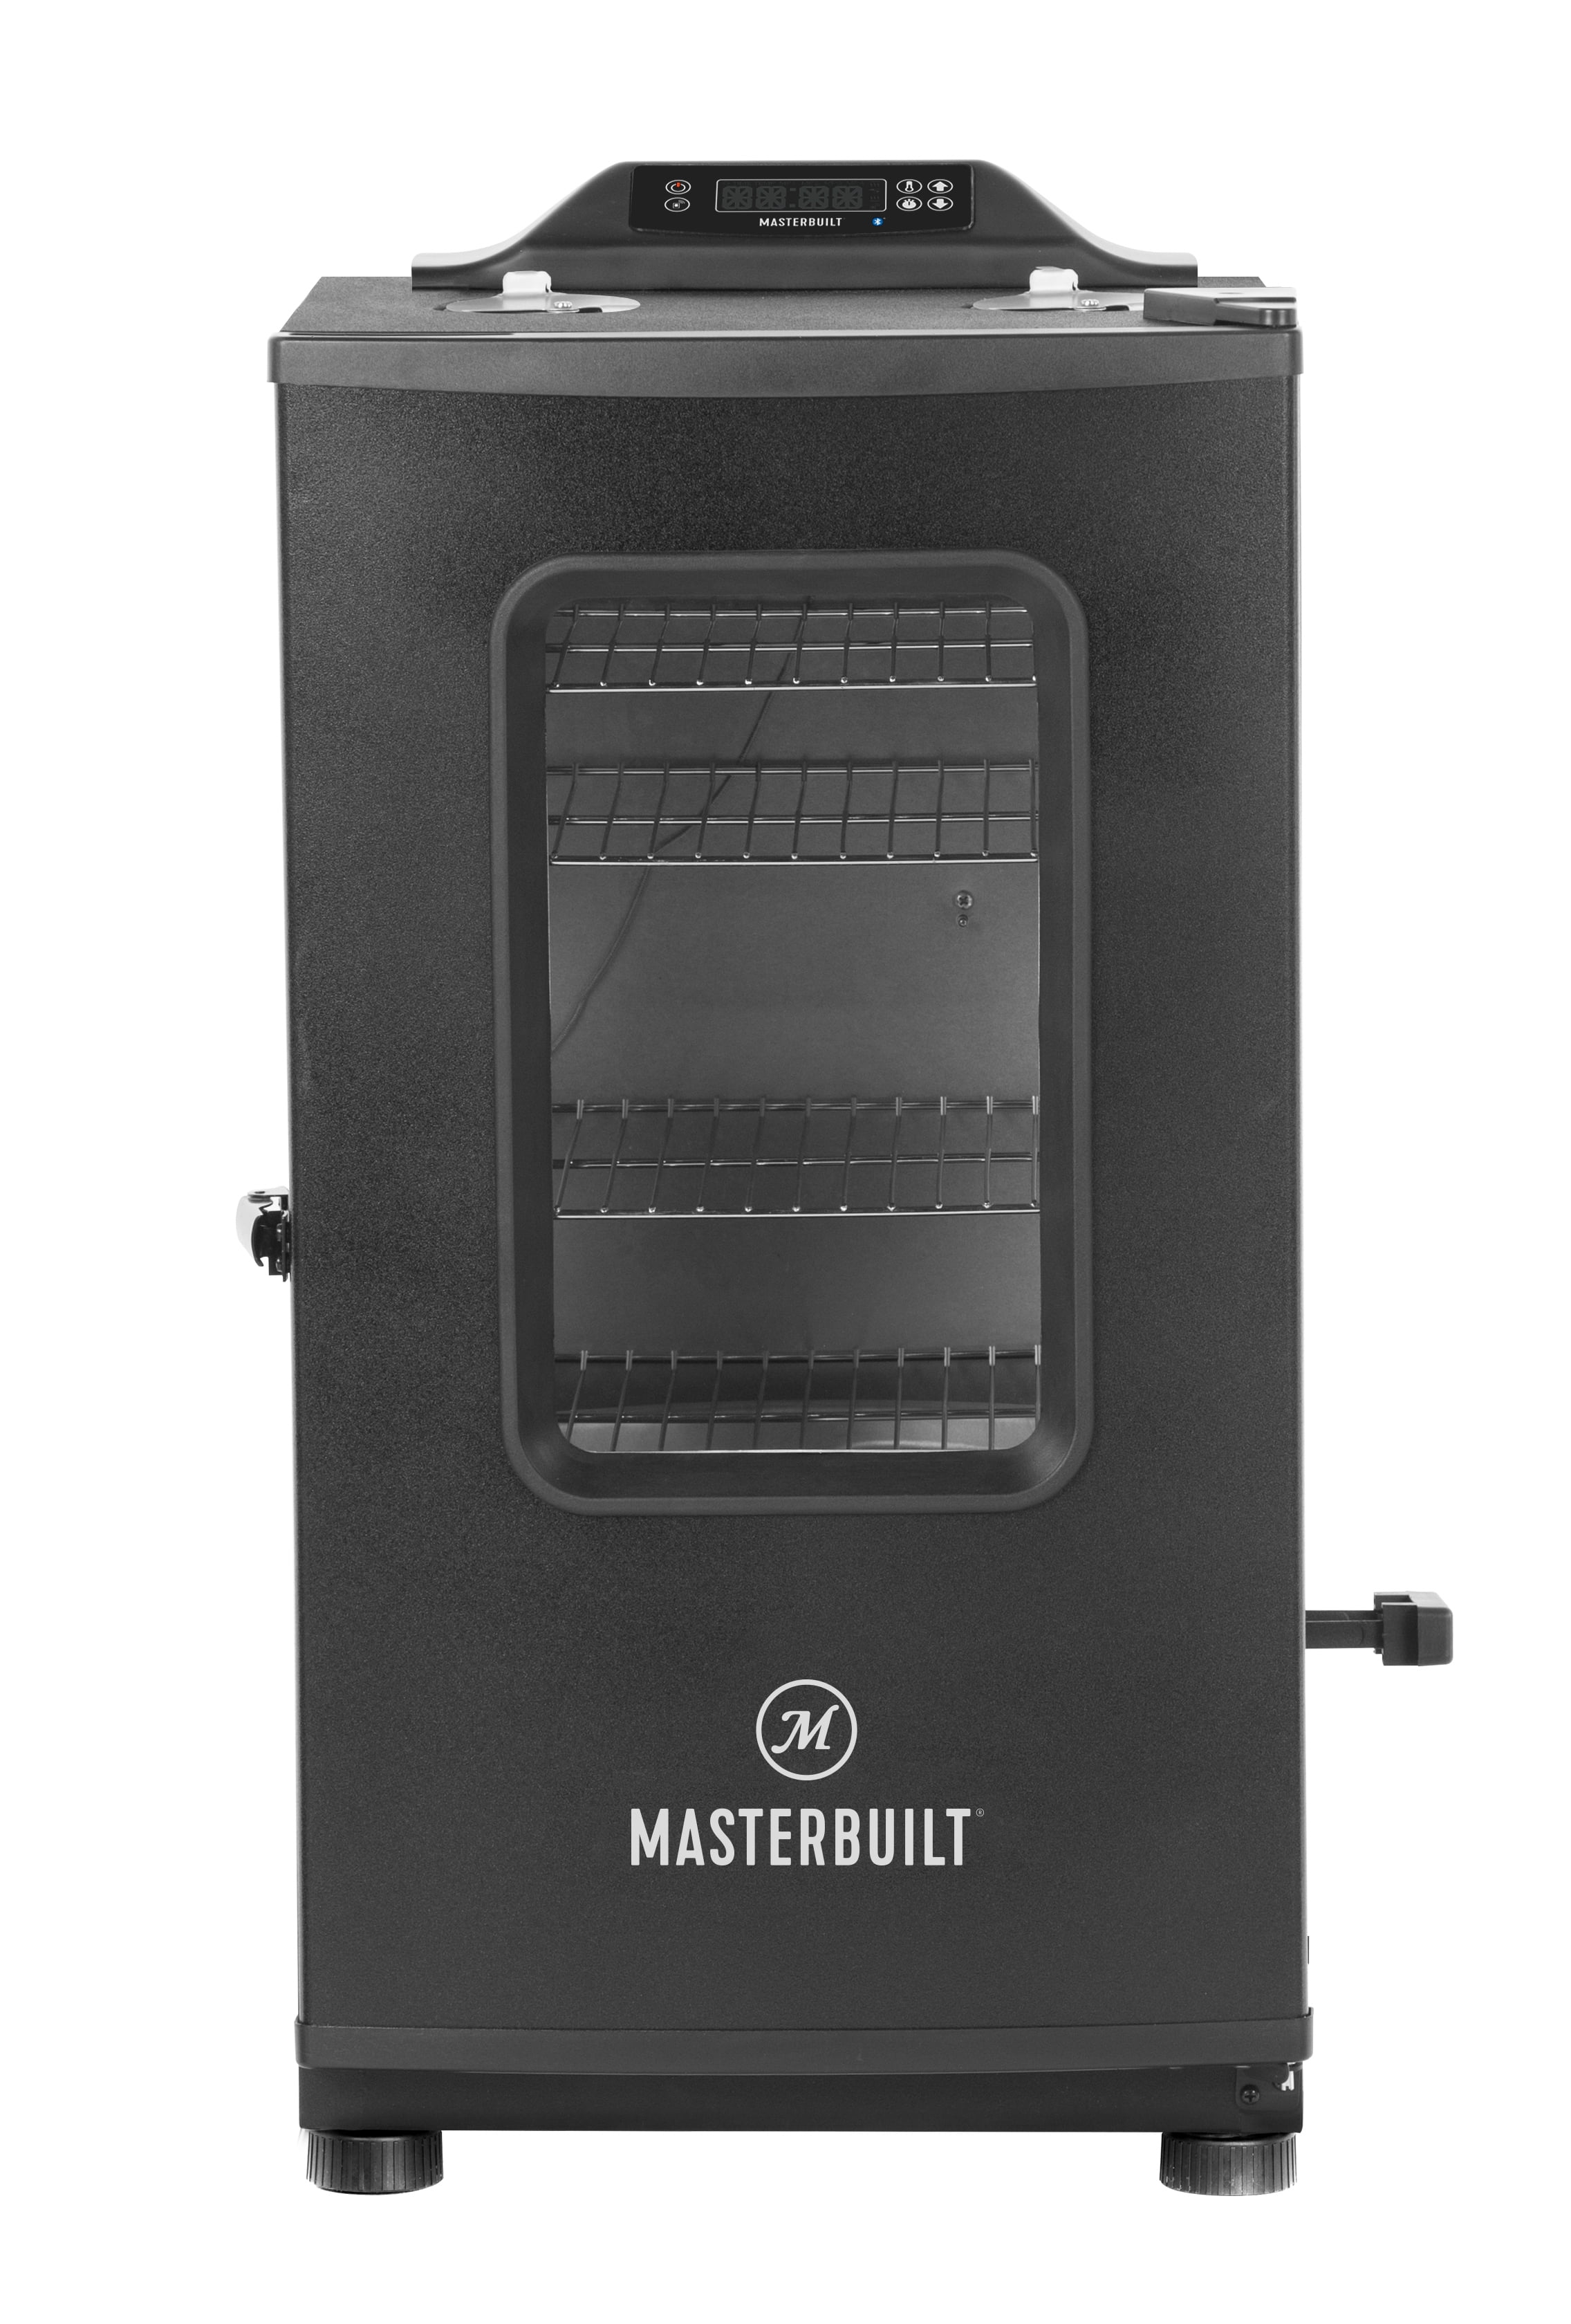 Masterbuilt Bluetooth Electric Smoker Review